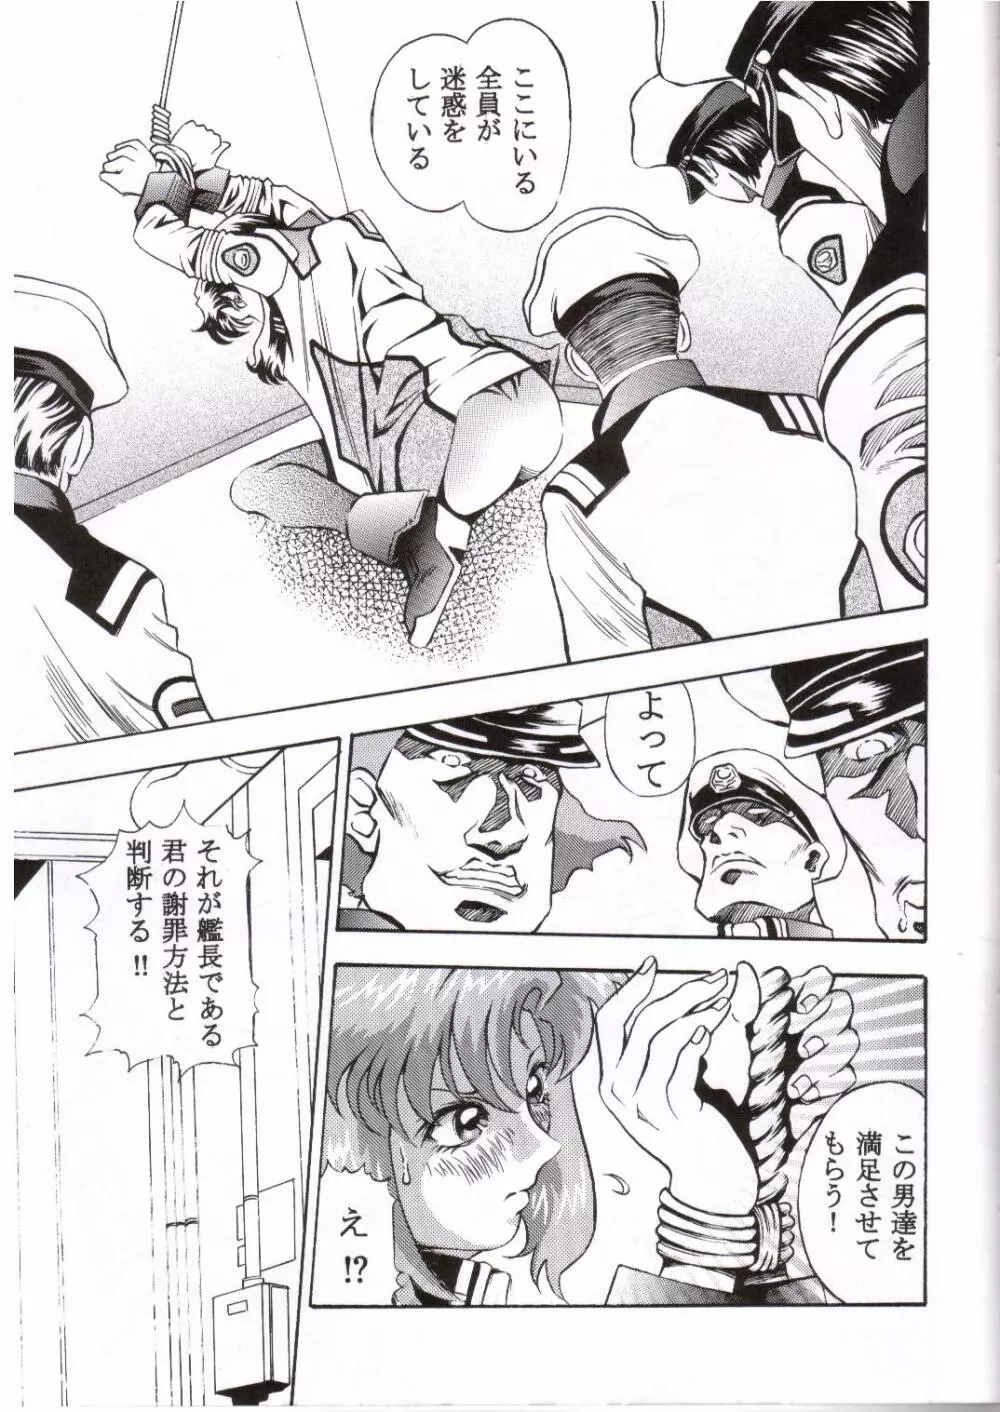 Gundam-H 4 - page10